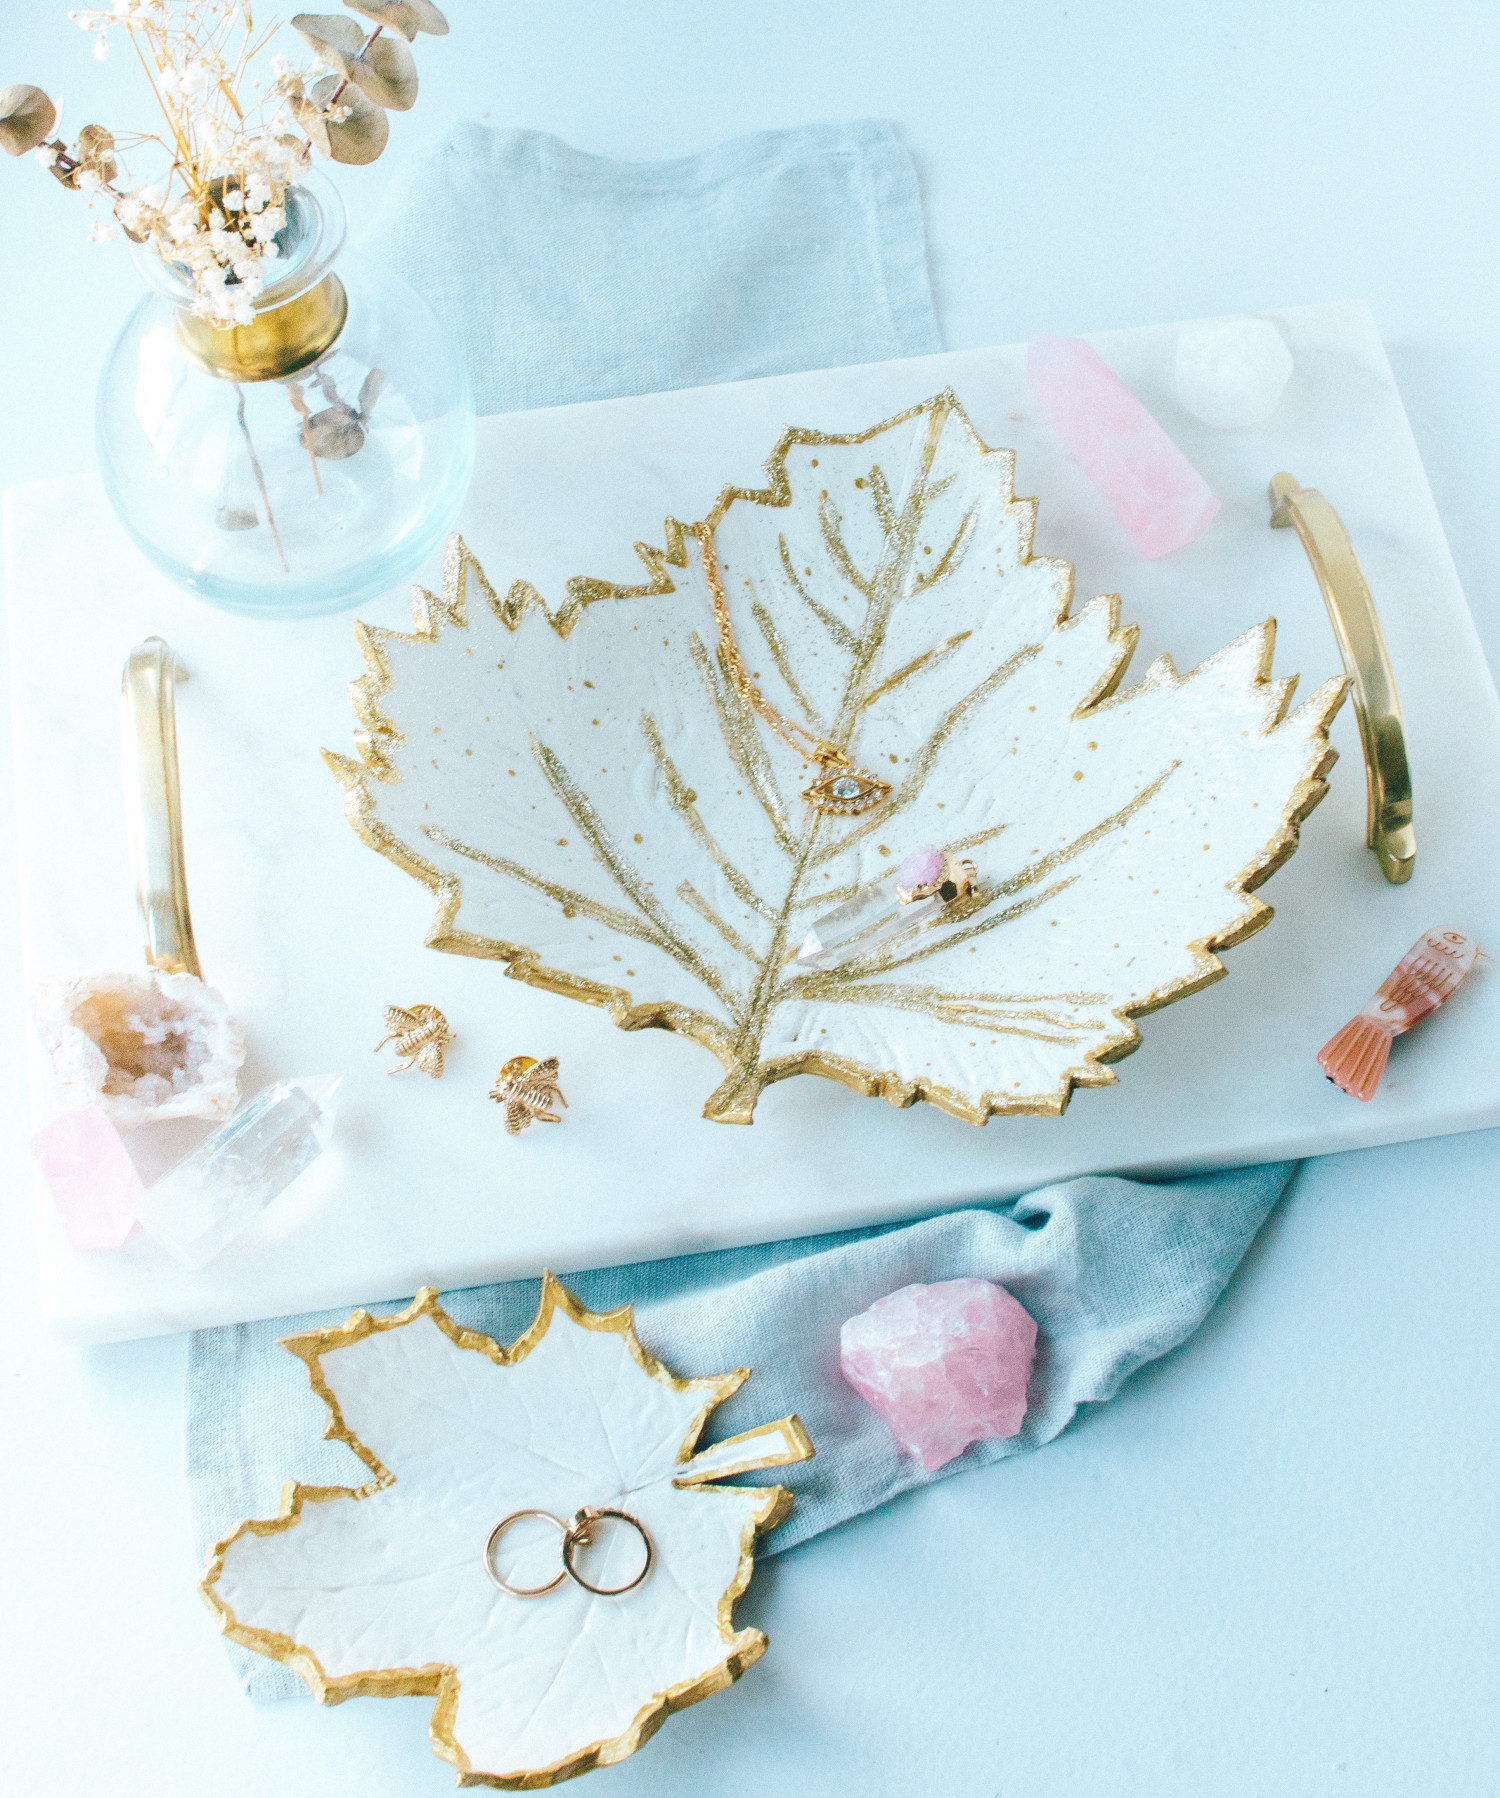 DIY // Homemade leaf trinket bowls in cream and gold glitter